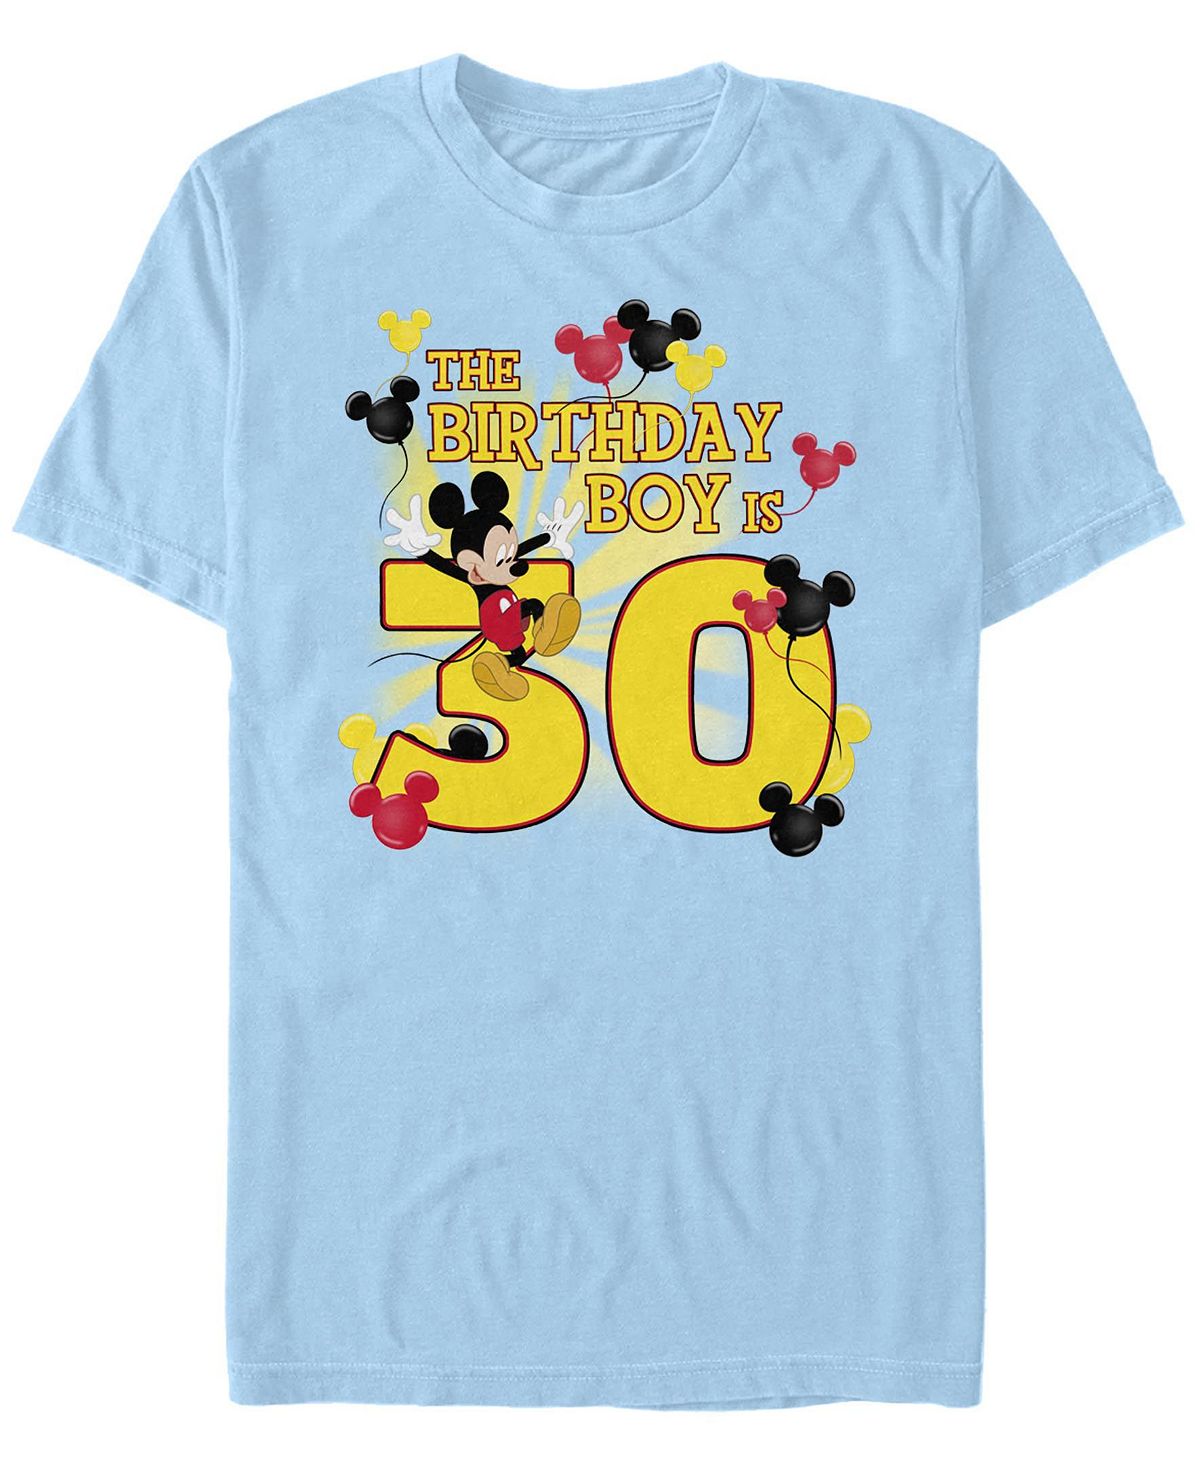 Мужская футболка с круглым вырезом и короткими рукавами mickey birthday 30 Fifth Sun, светло-синий мужская футболка mickey irish с короткими рукавами и круглым вырезом fifth sun зеленый